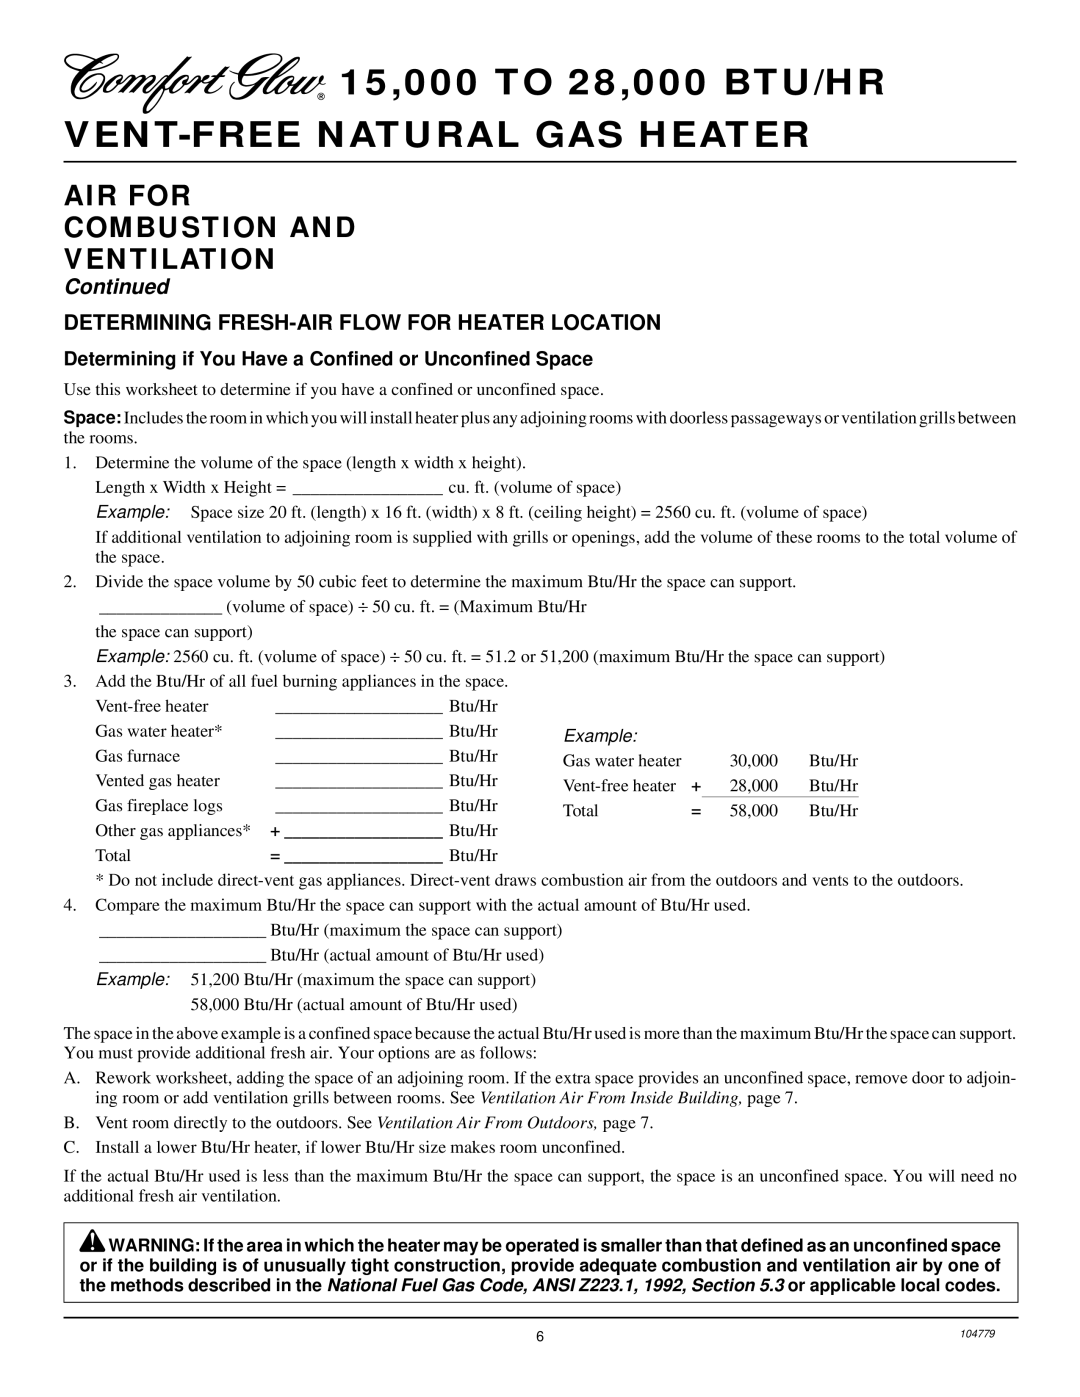 Desa Tech RFN28TD installation manual AIR for Combustion Ventilation, Determining FRESH-AIR Flow for Heater Location 